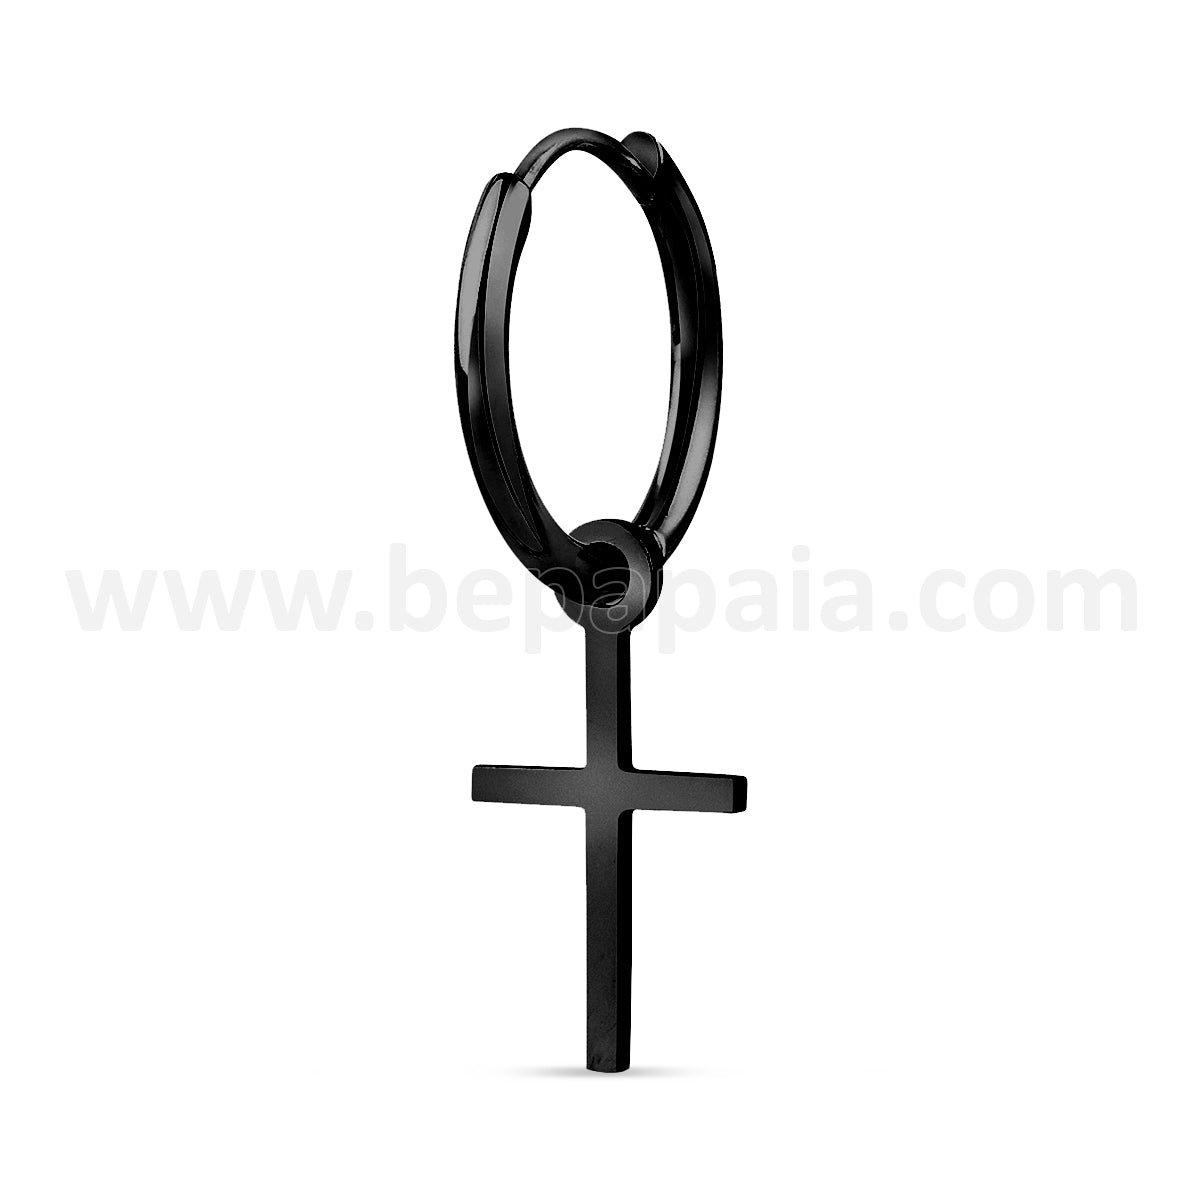 Black steel color hoop earring with small cross